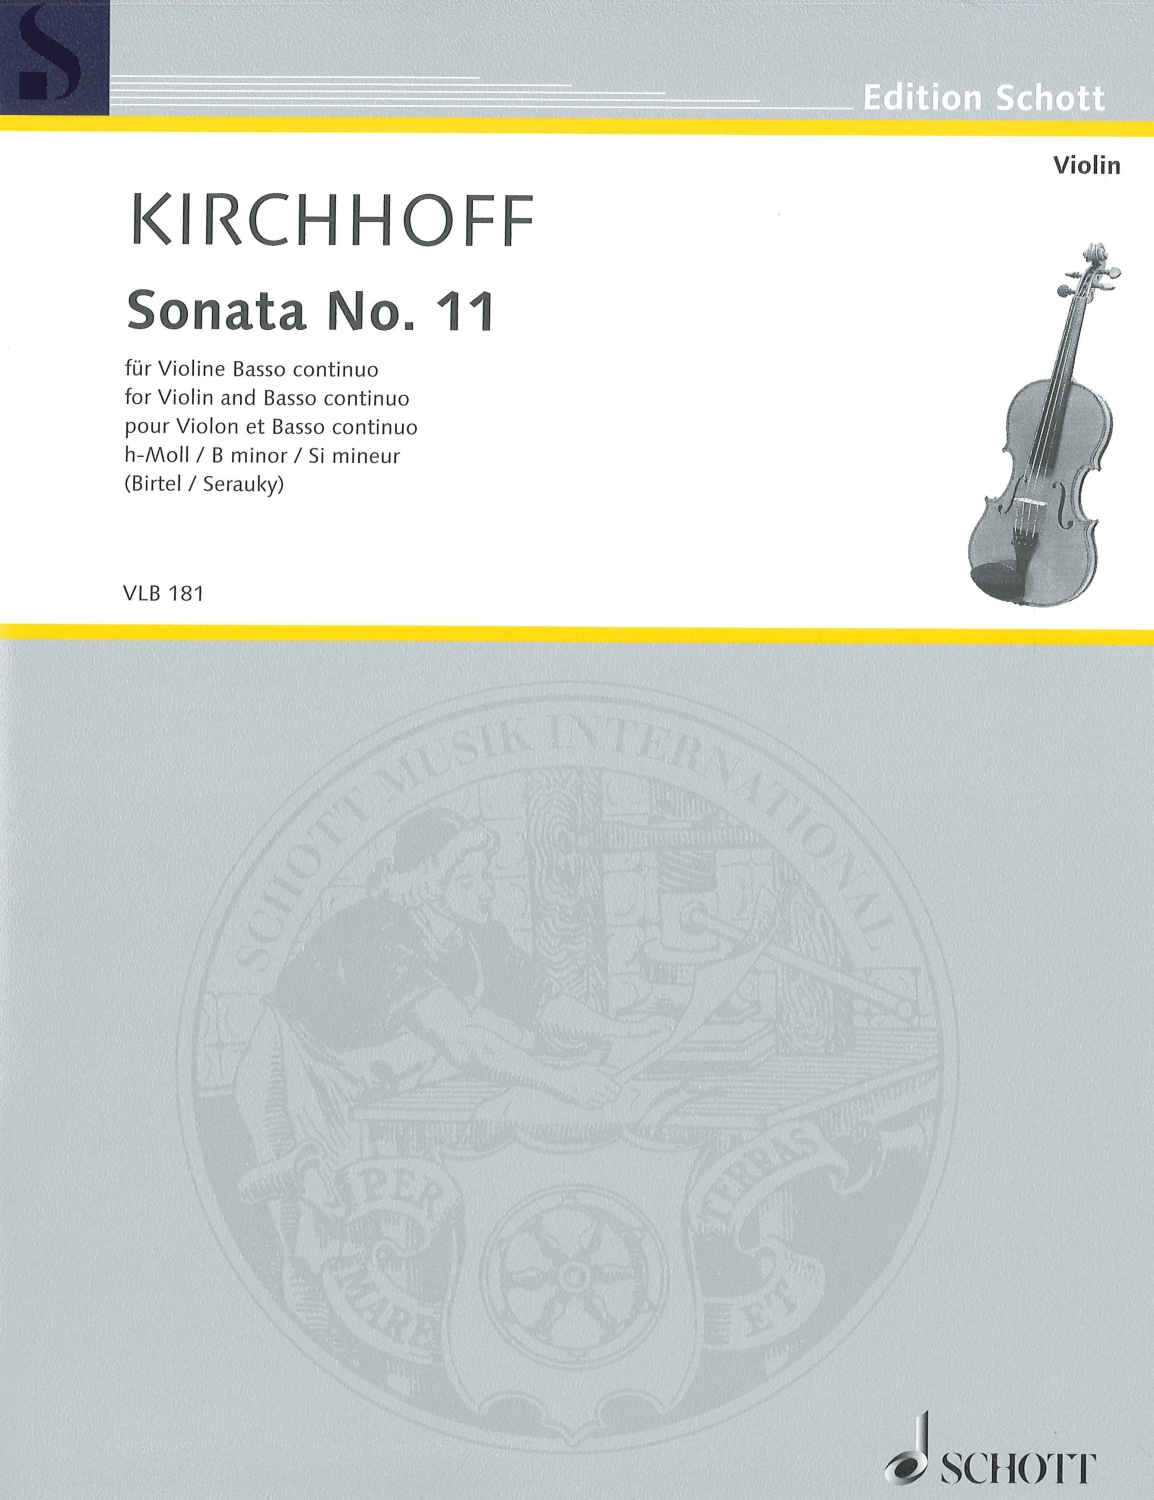 gottfried-kirchhoff-sonate-no-11-h-moll-vl-pno-_0001.JPG